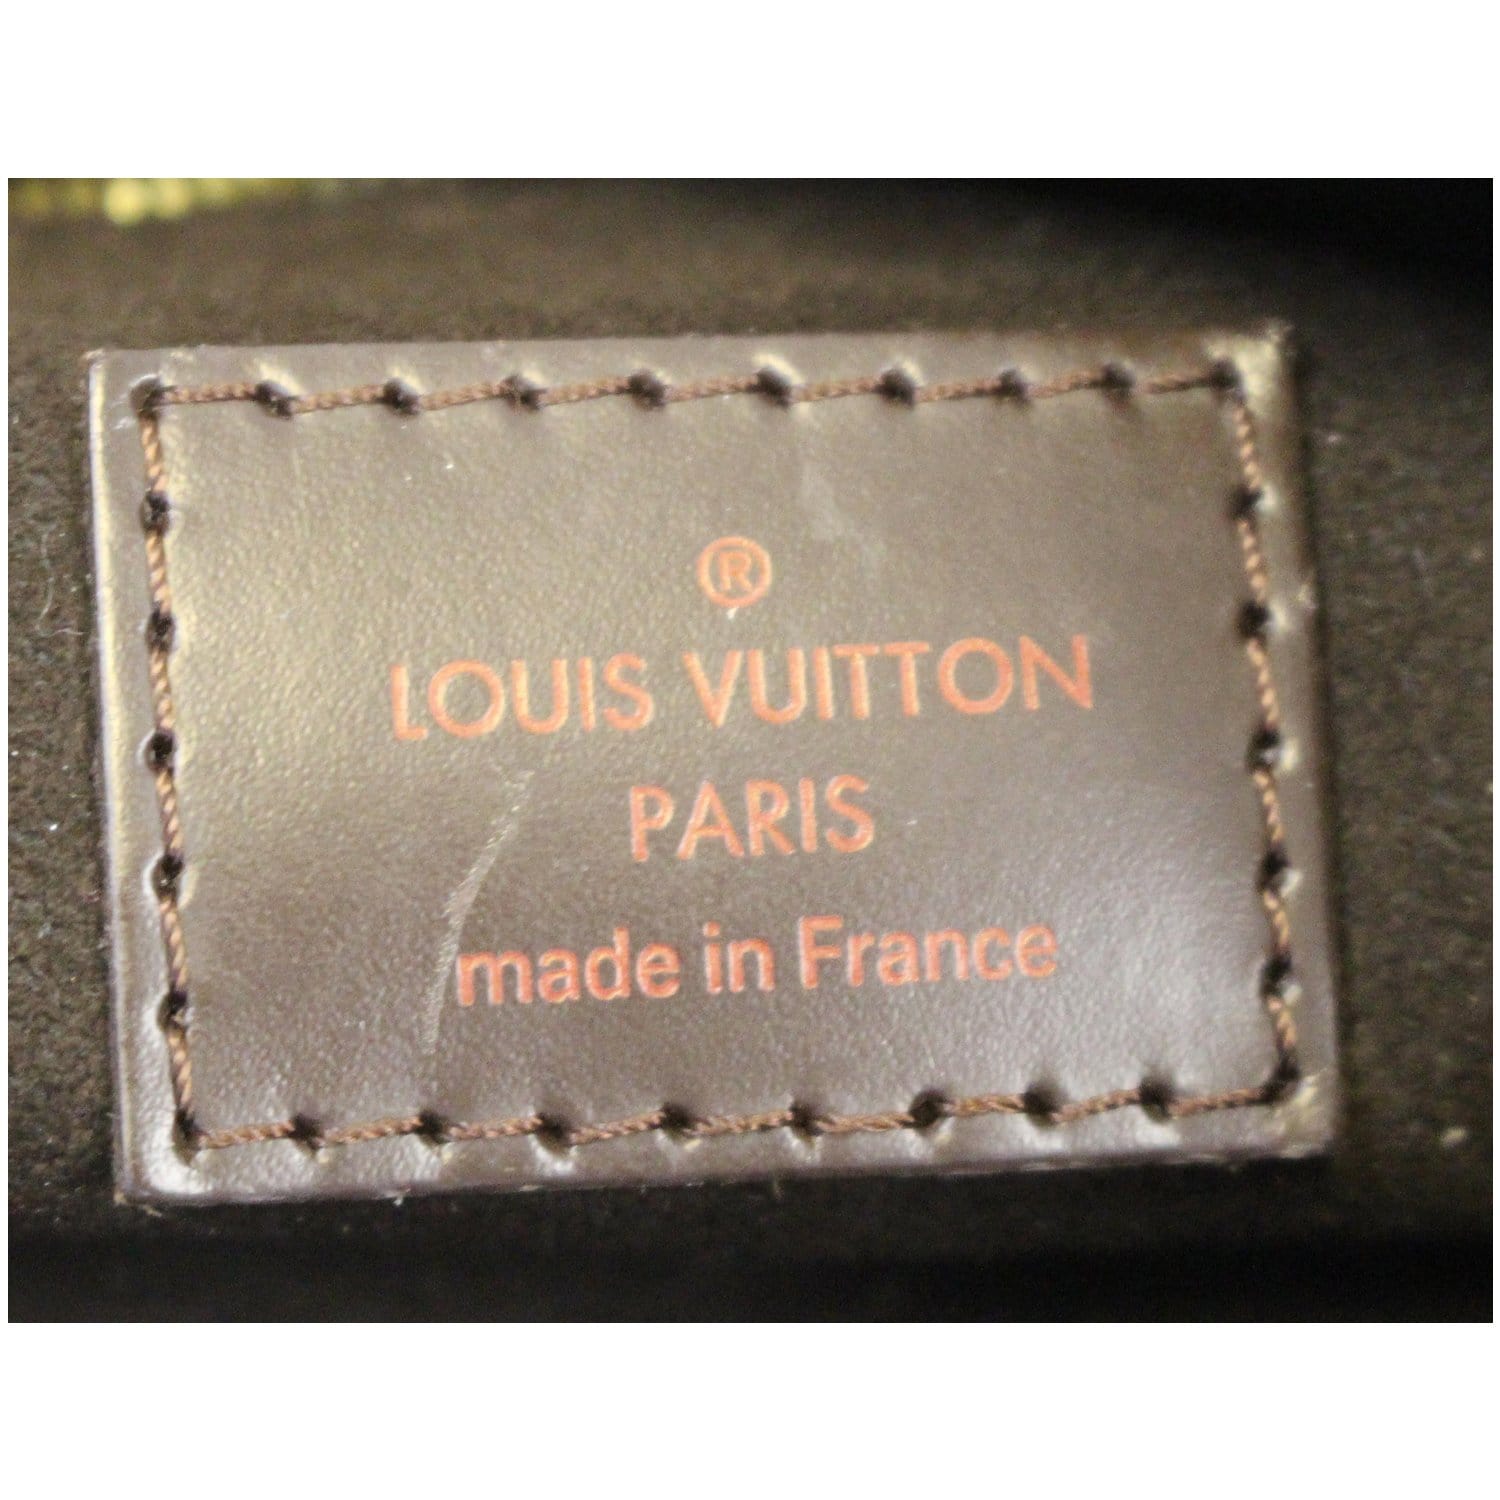 Louis Vuitton Authentic Portobello PM Damier Ebene Canvas - $1499 - From Uta